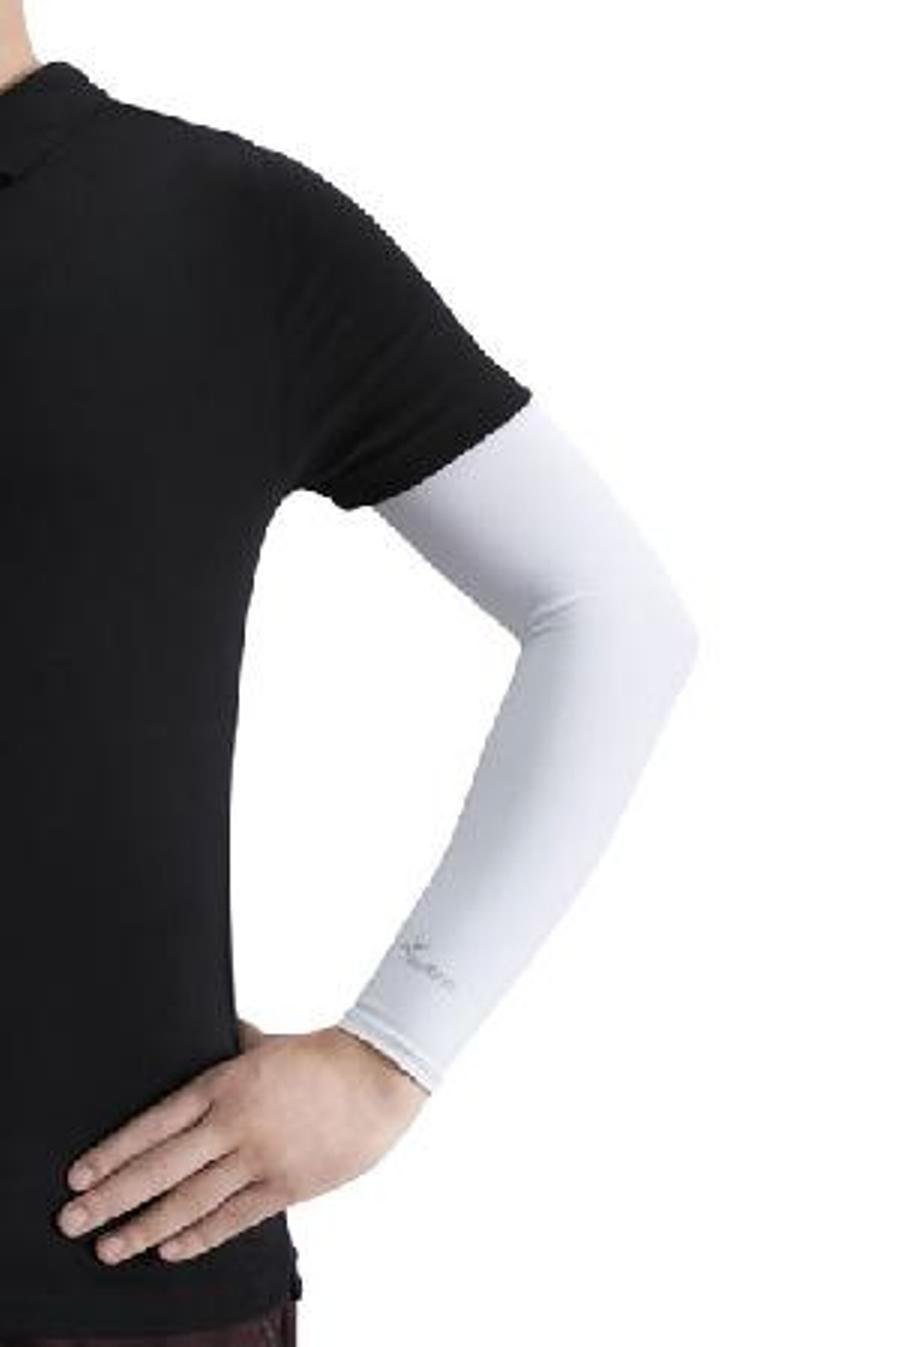 IceRays Cooling UV Arm Sleeves White